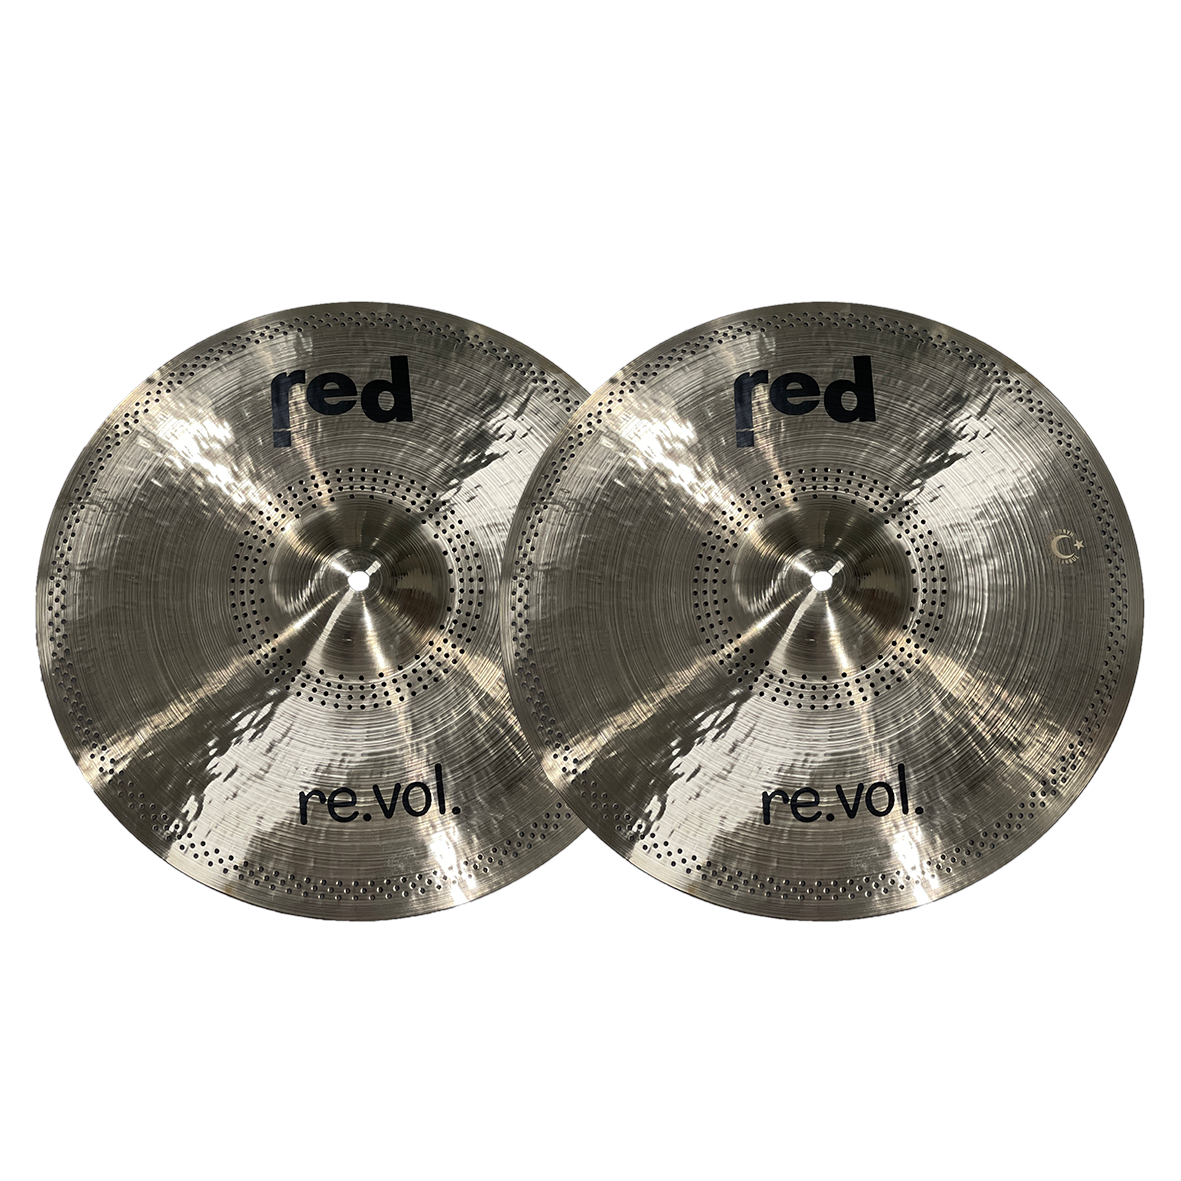 re.vol ( Reduced Volume ) Series Hi-hat Cymbals